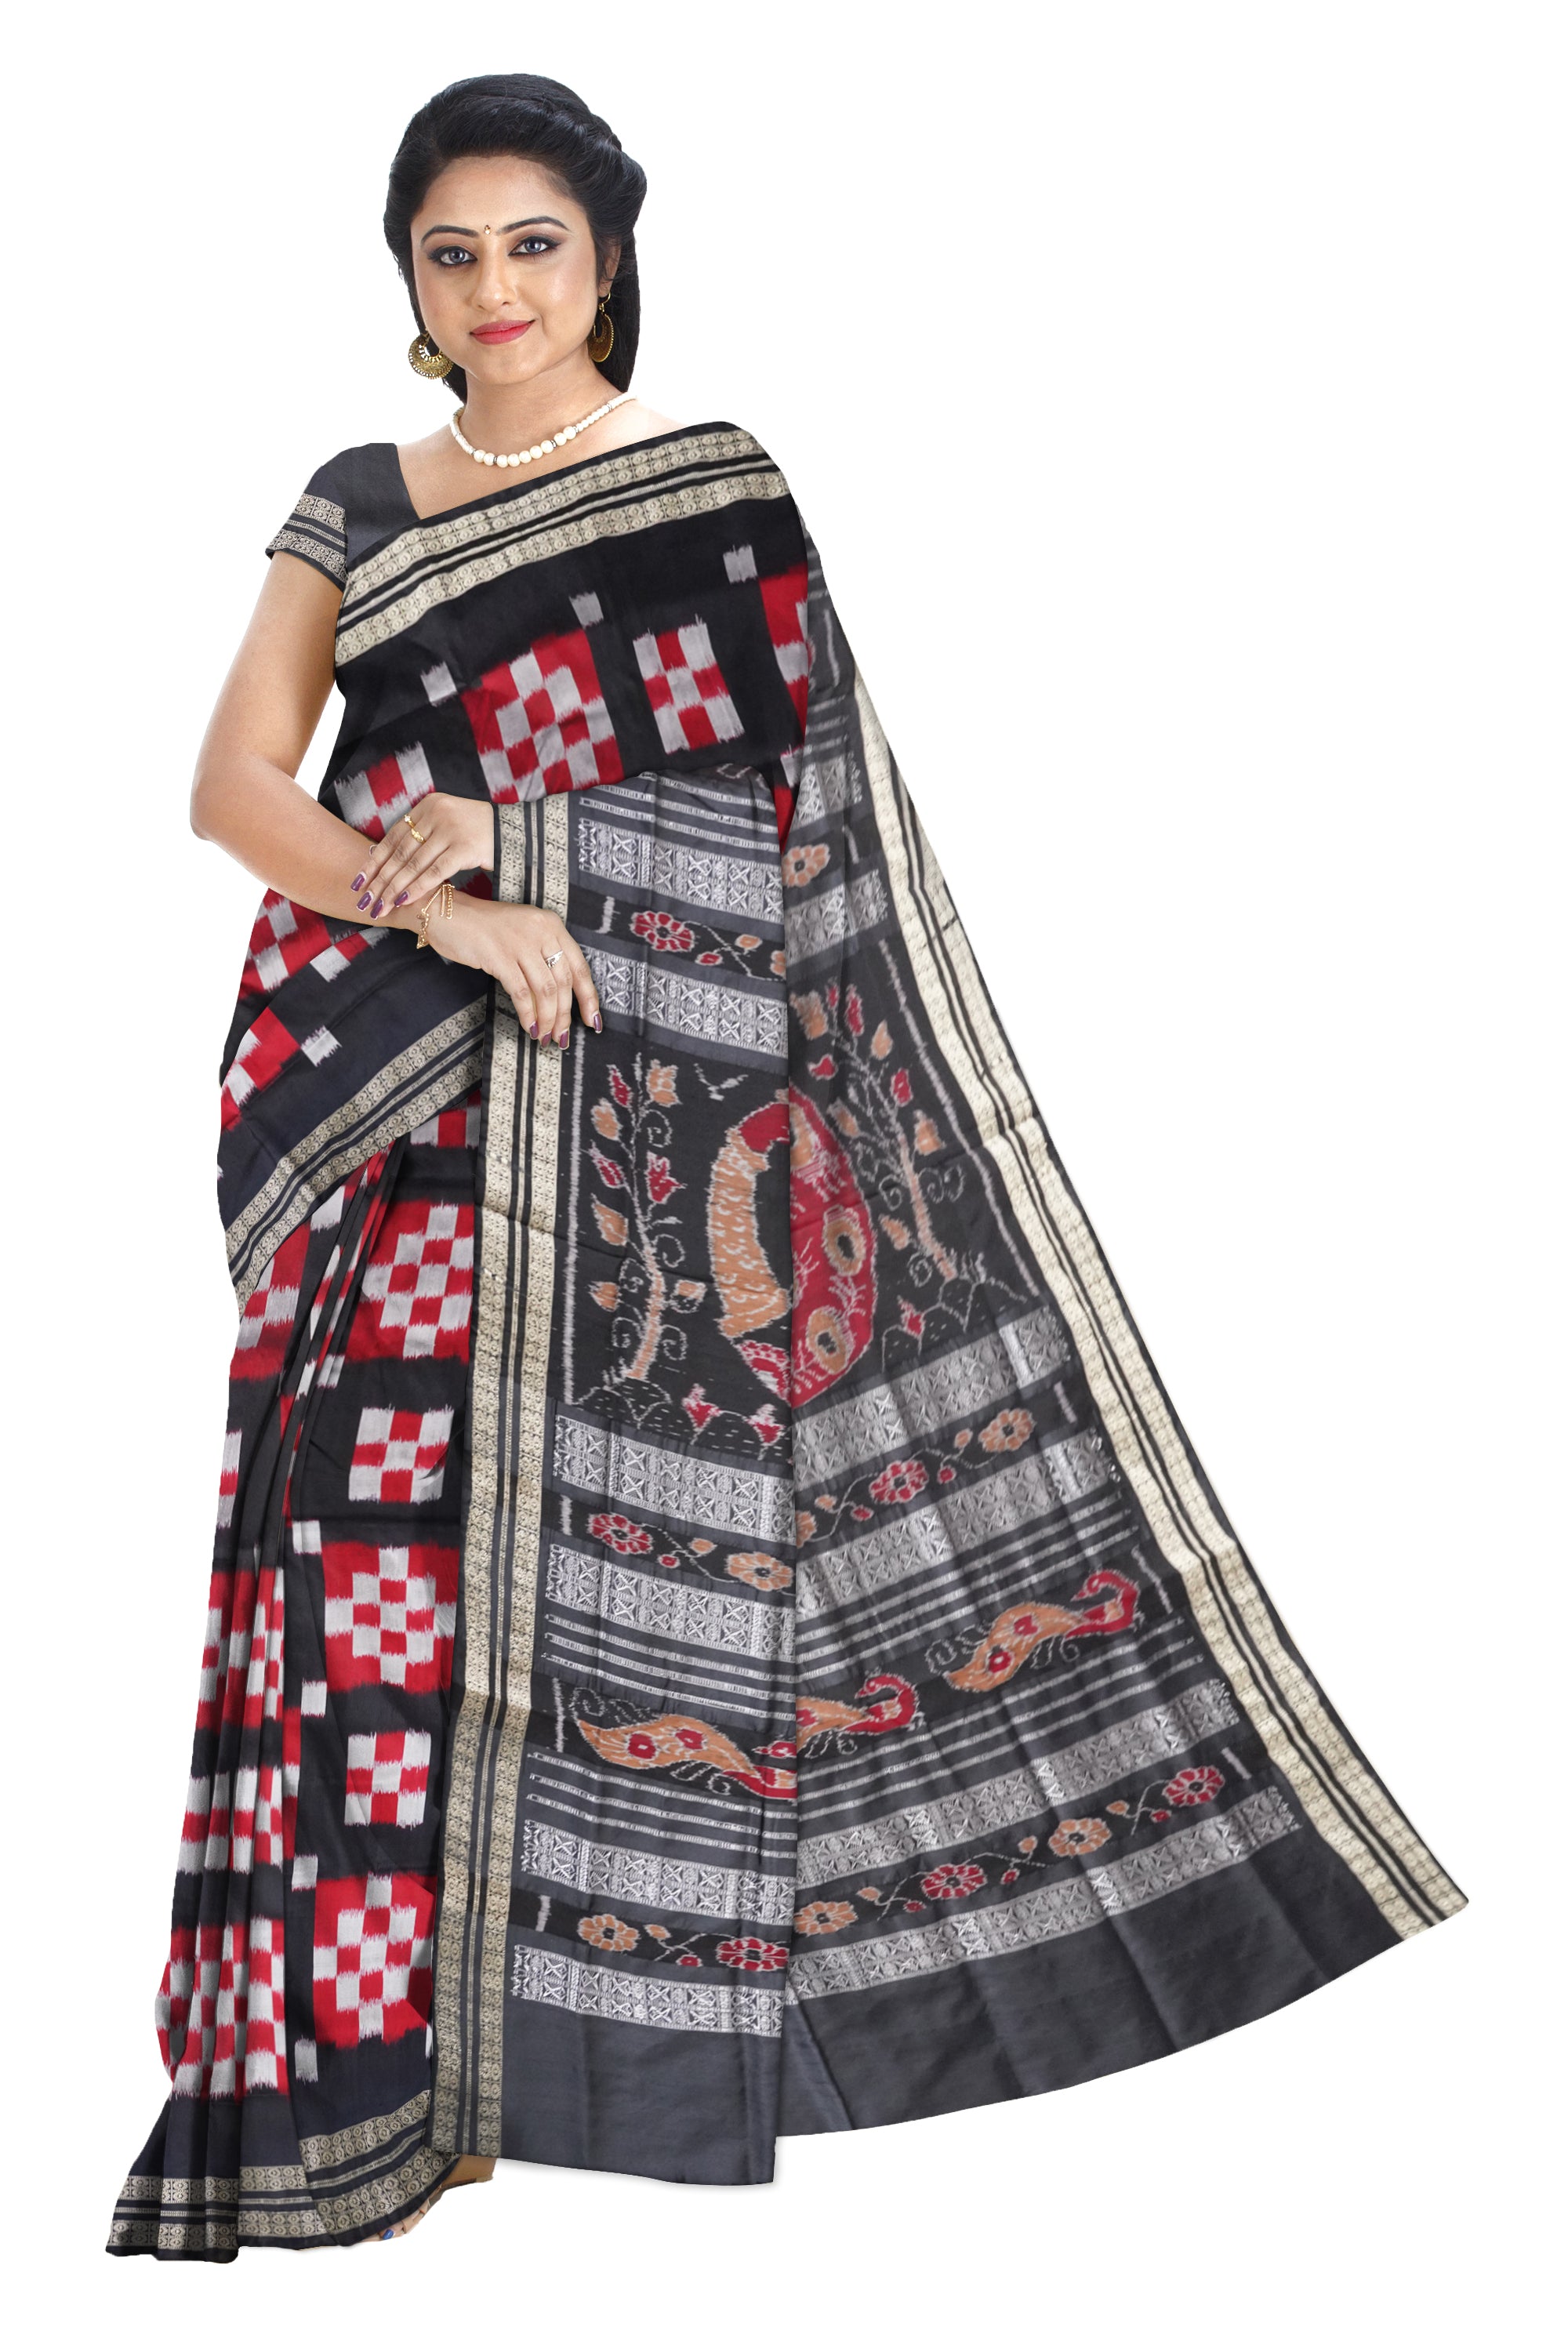 Pasapali pattern pata saree, big peacock pallu, versatile for all occasions. - Koshali Arts & Crafts Enterprise